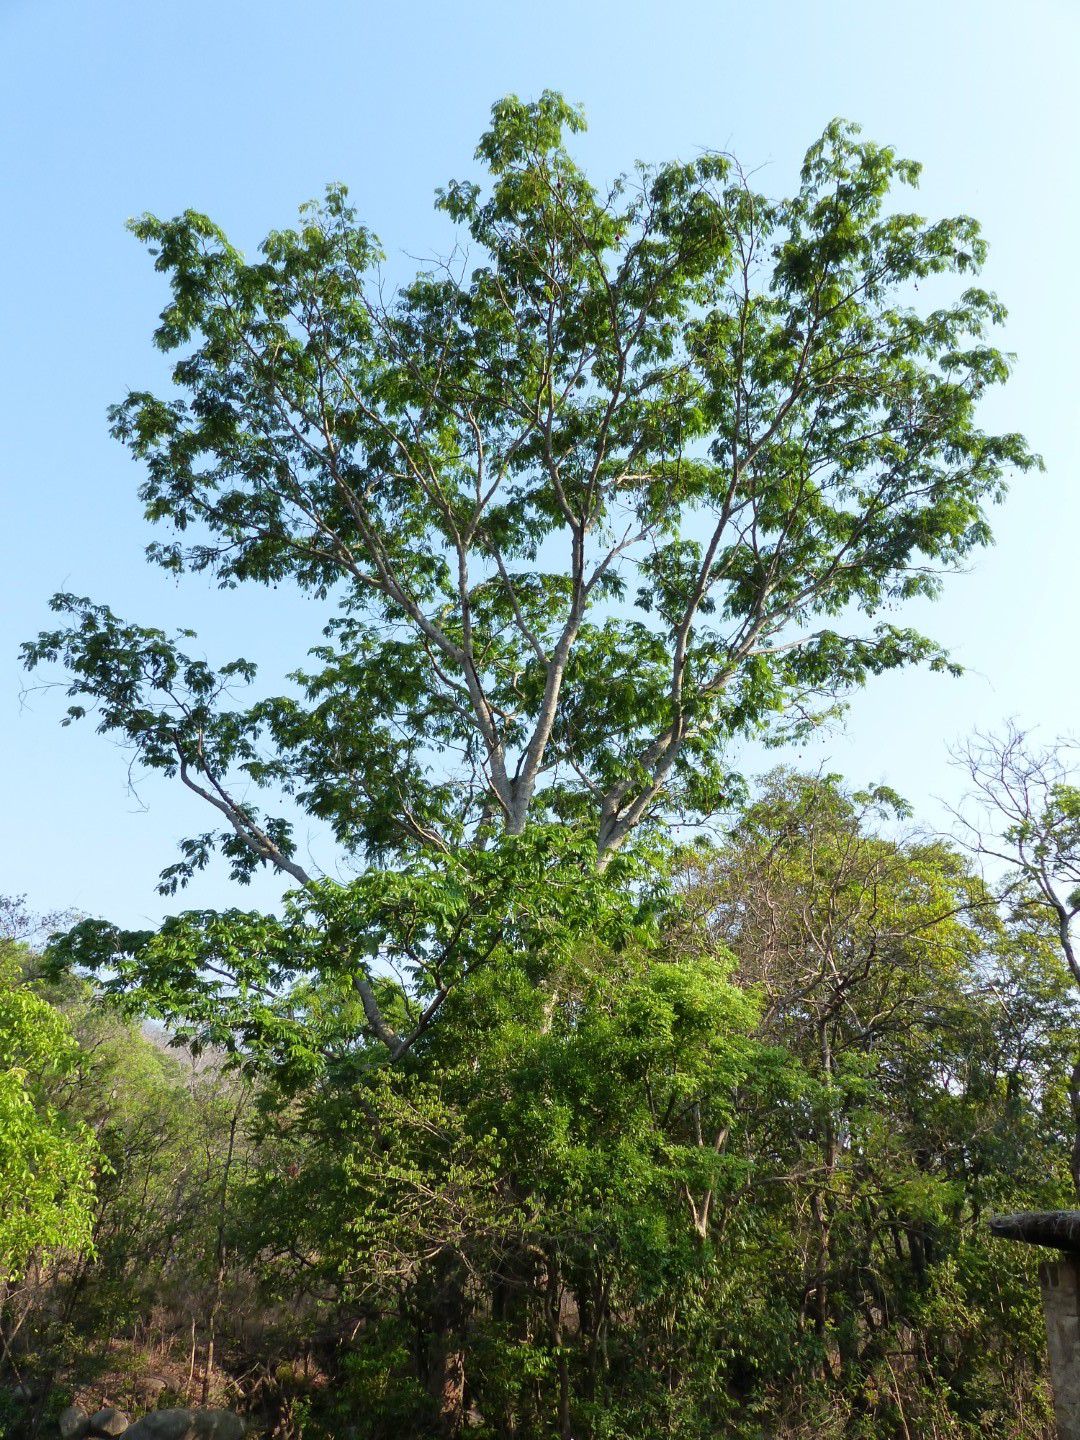 Parkia filicoidea (Mkundi) tree